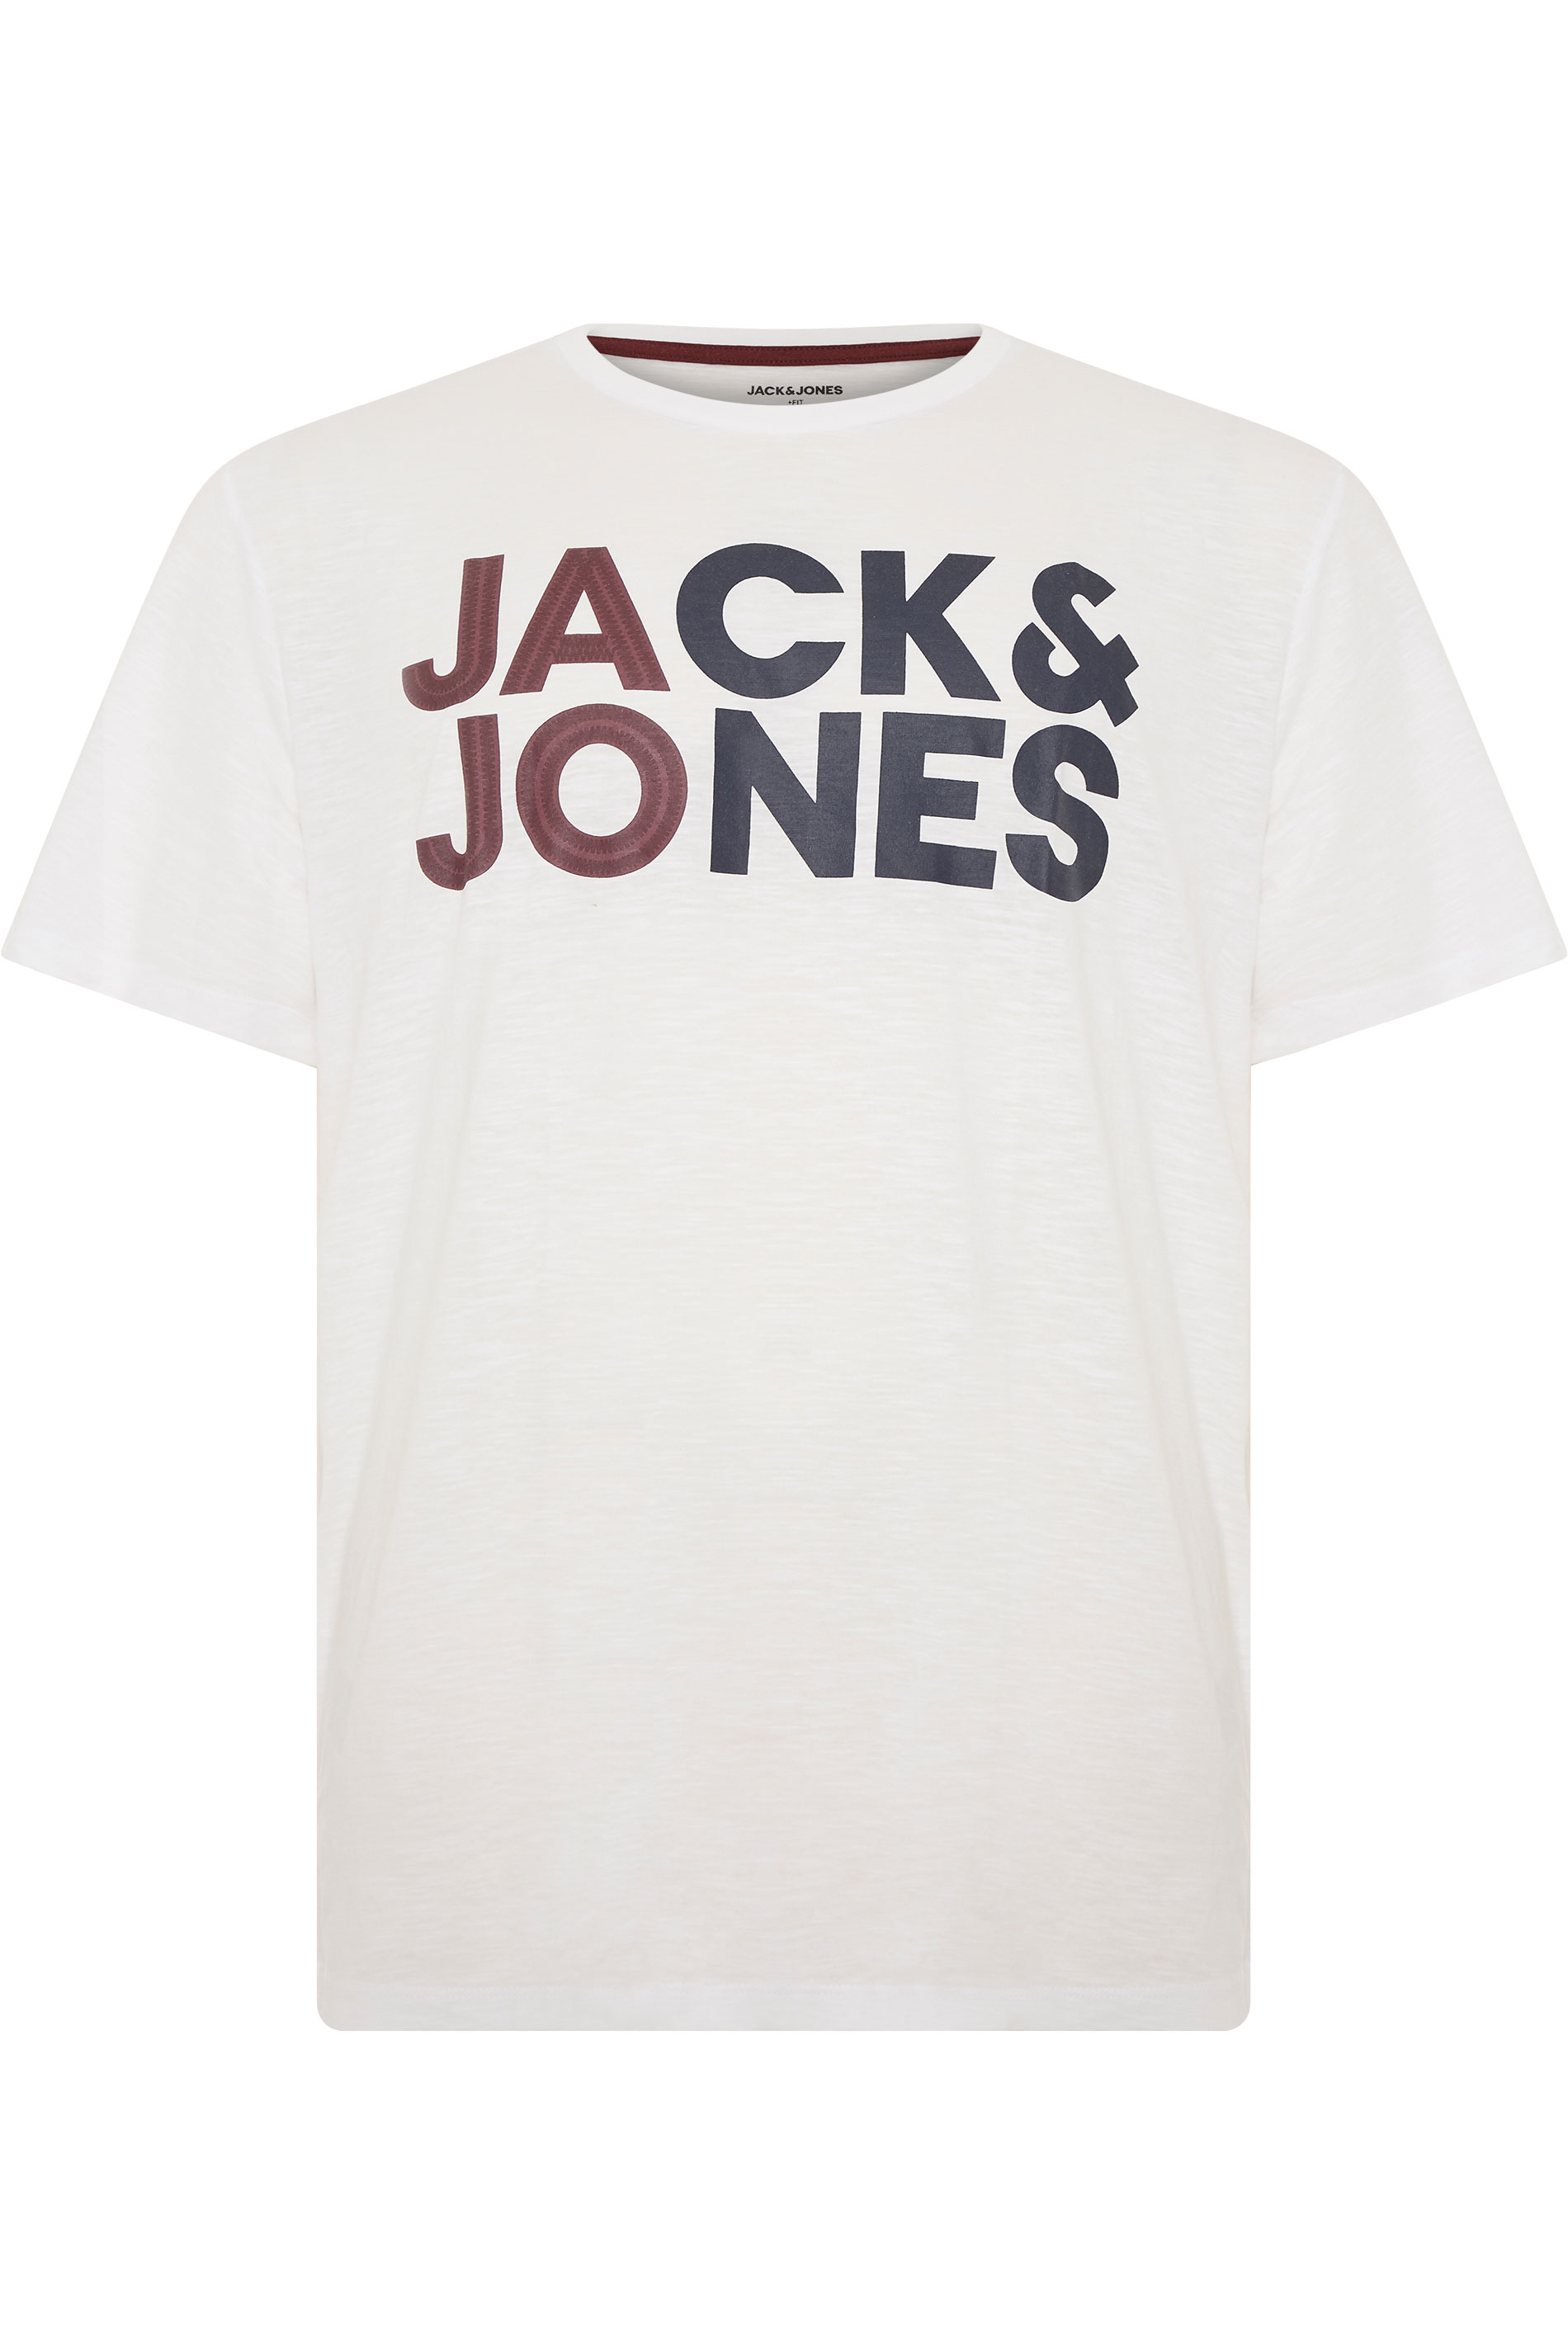 JACK & JONES Big & Tall White Marl Logo Crew Neck T-Shirt_F.jpg